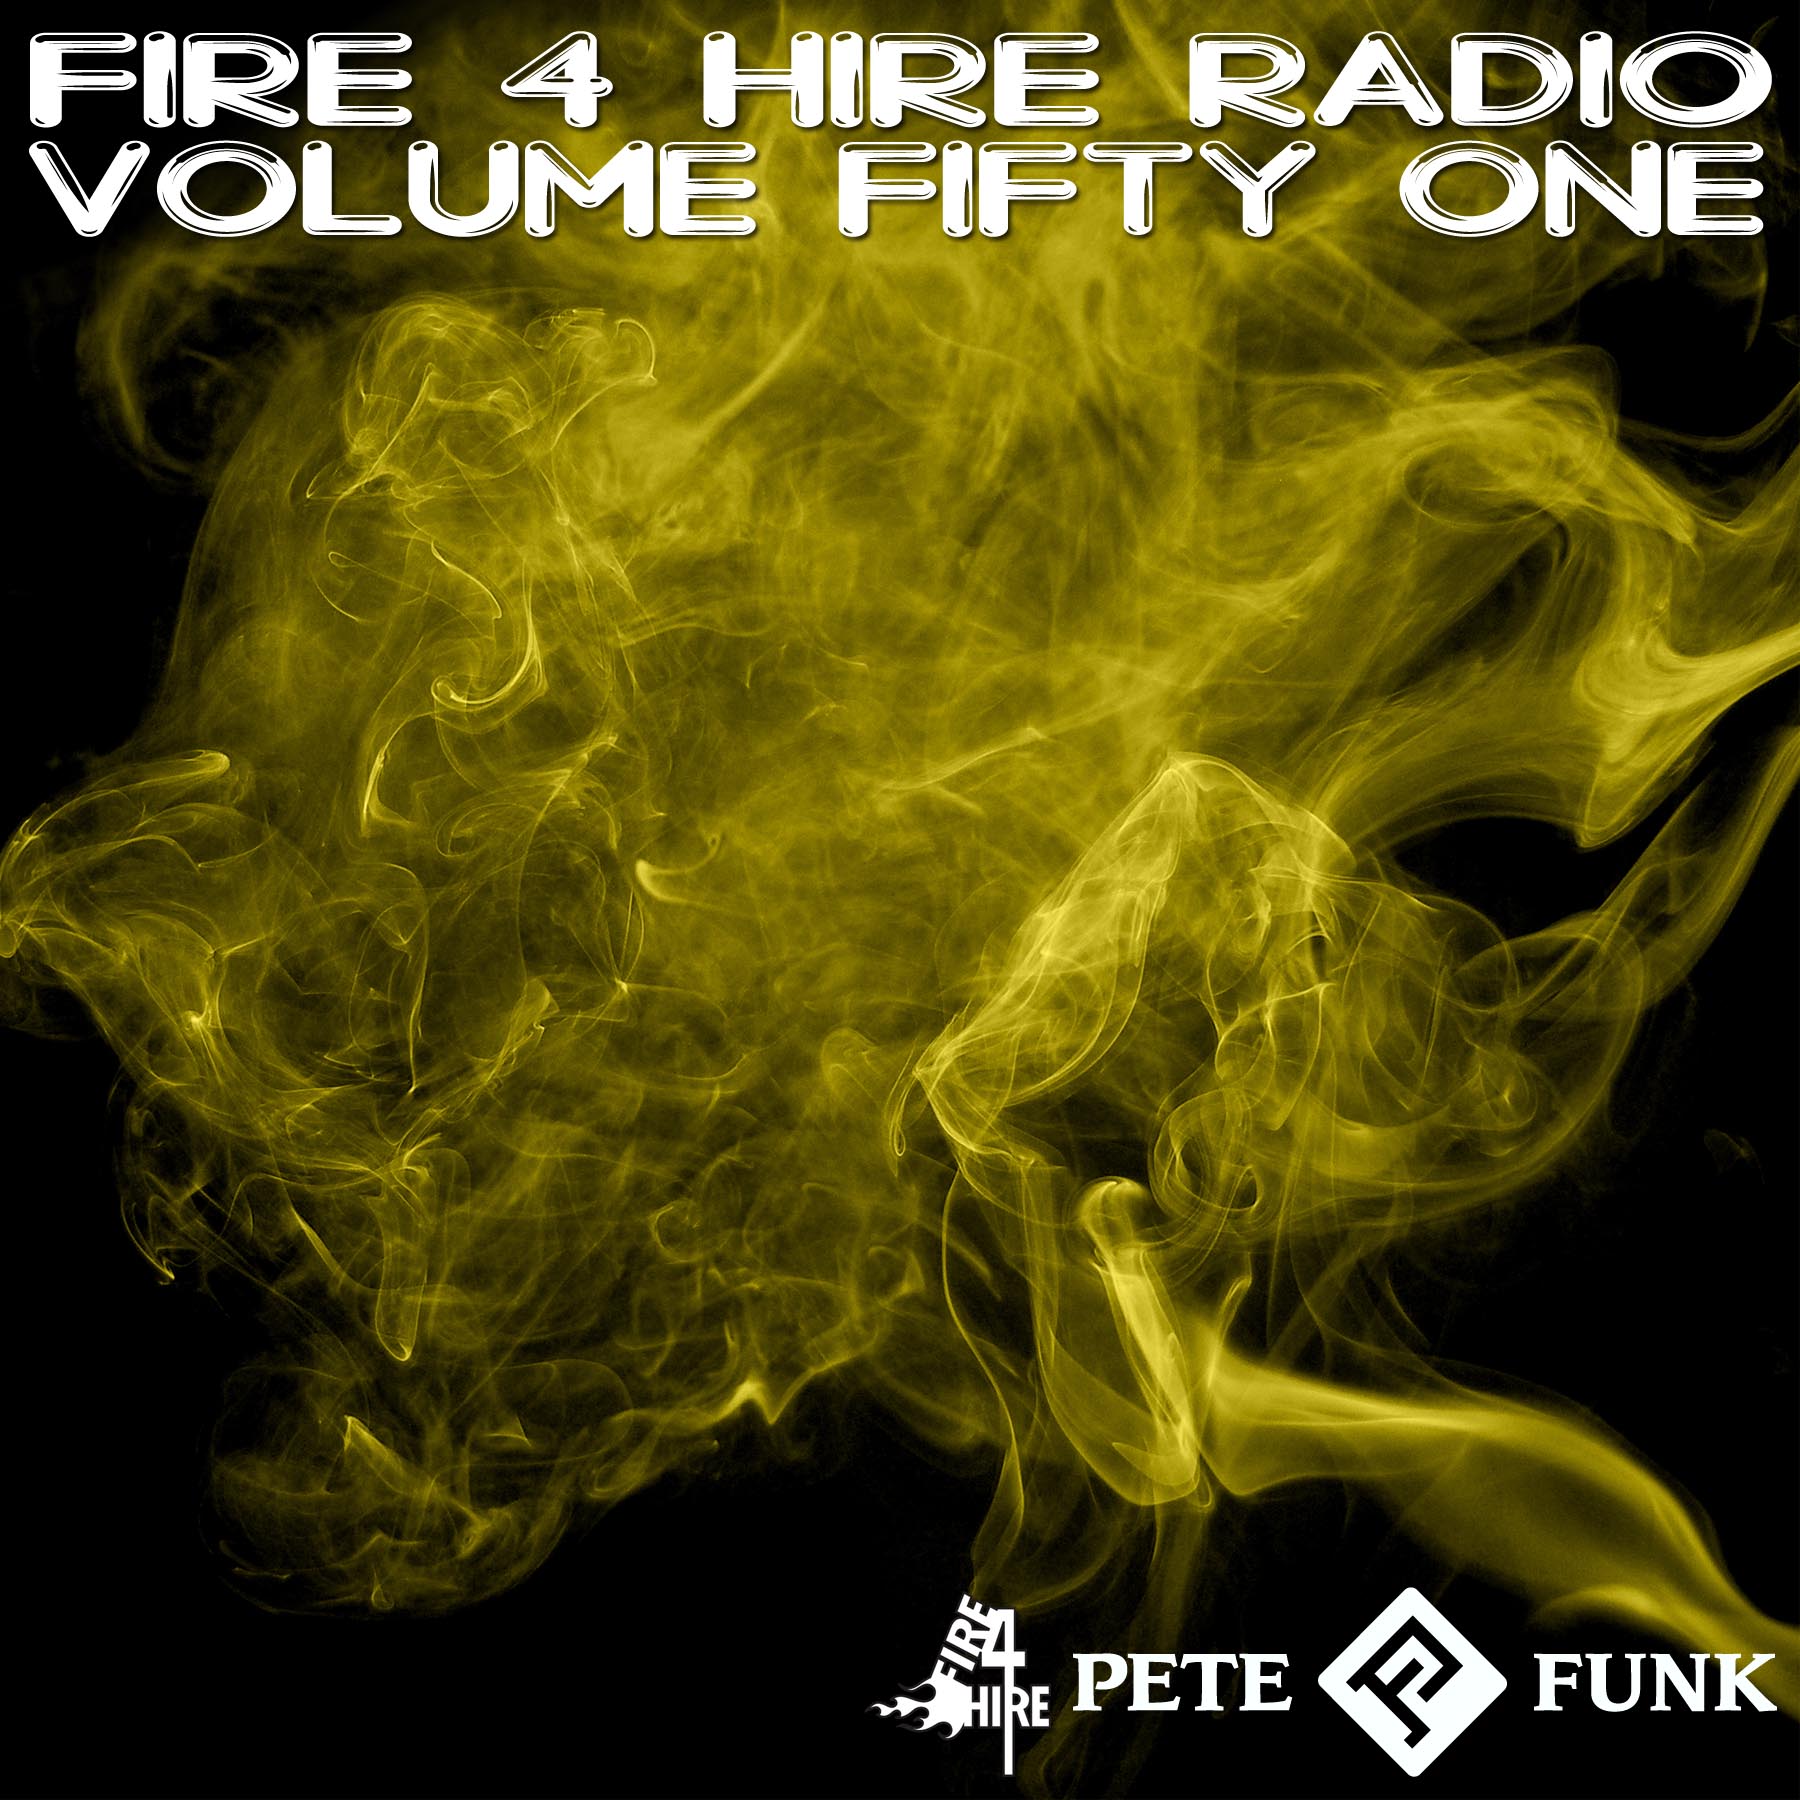 Fire 4 Hire Radio Pete Funk Vol. 51